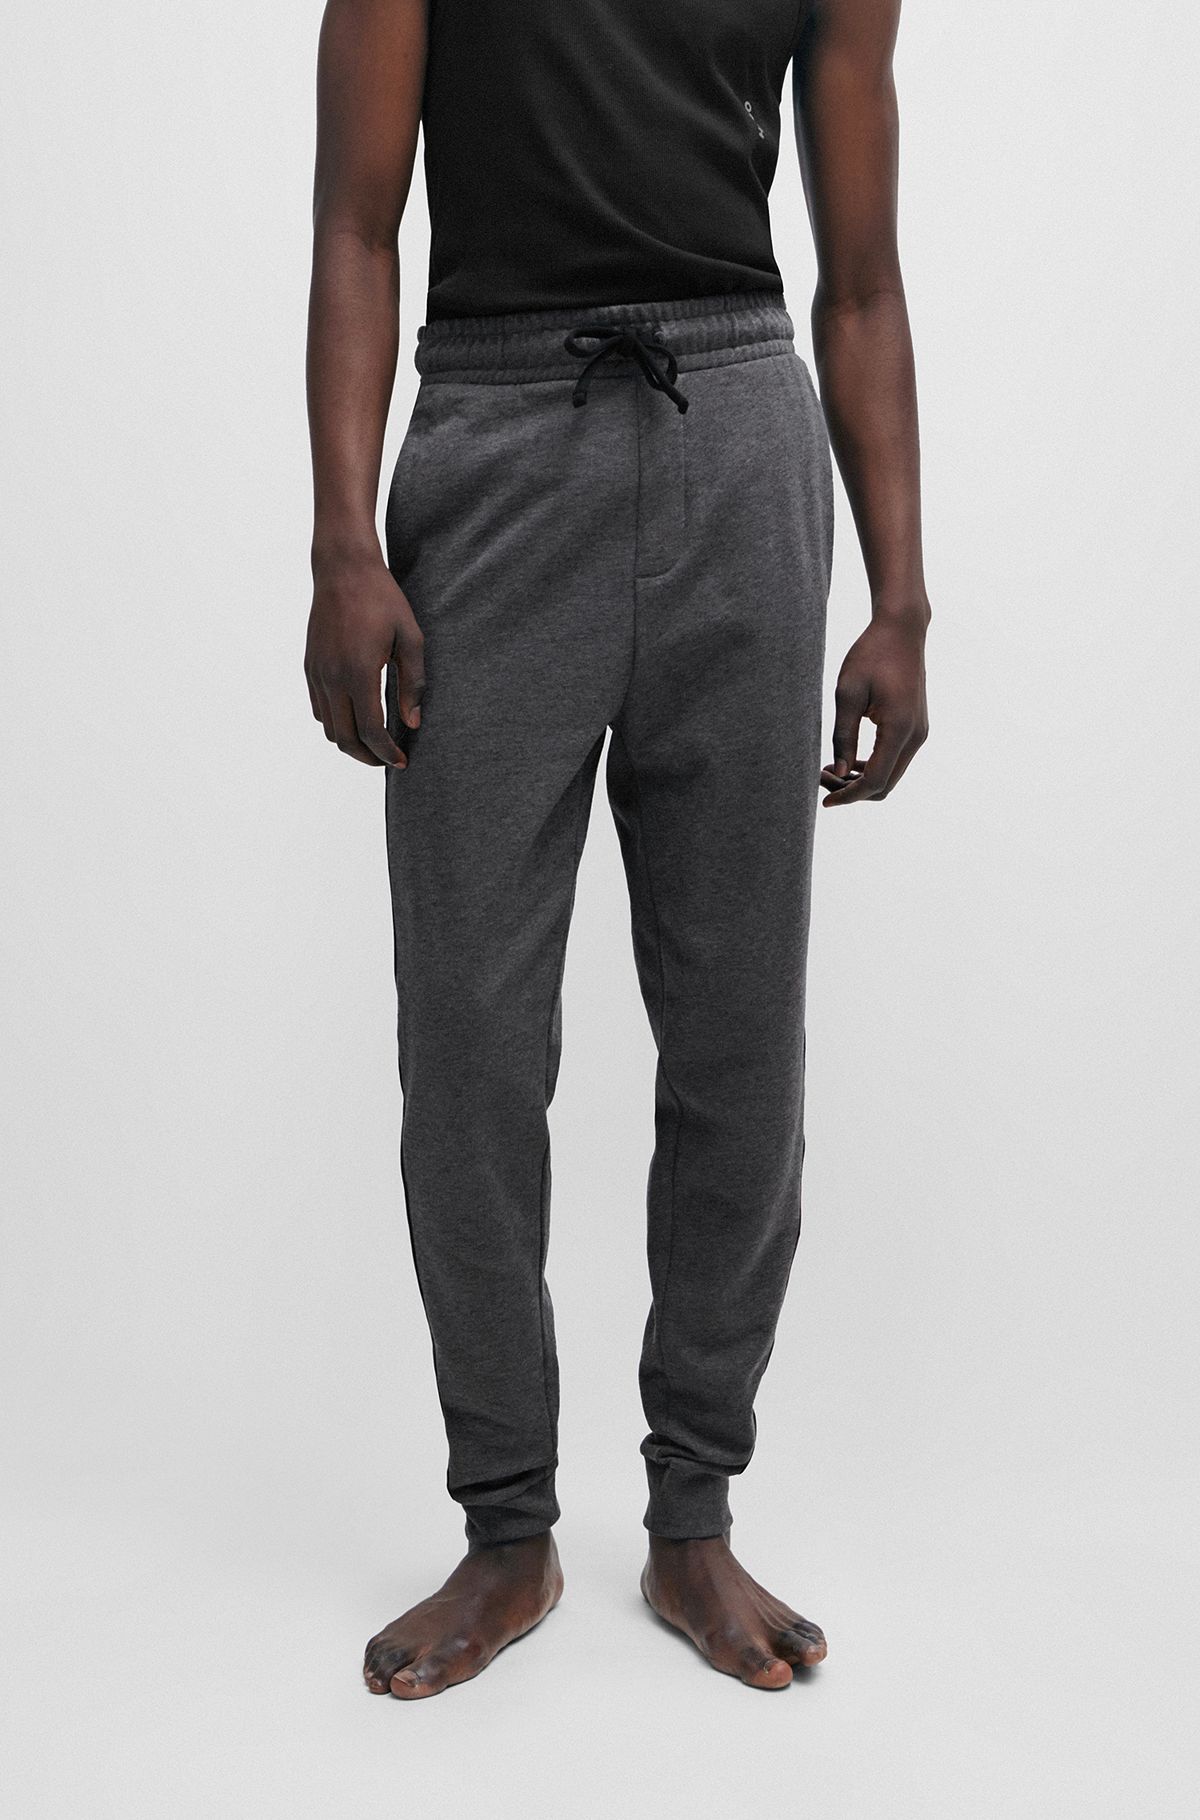 Sweatshirts and Jogging Pants in Grey by HUGO BOSS